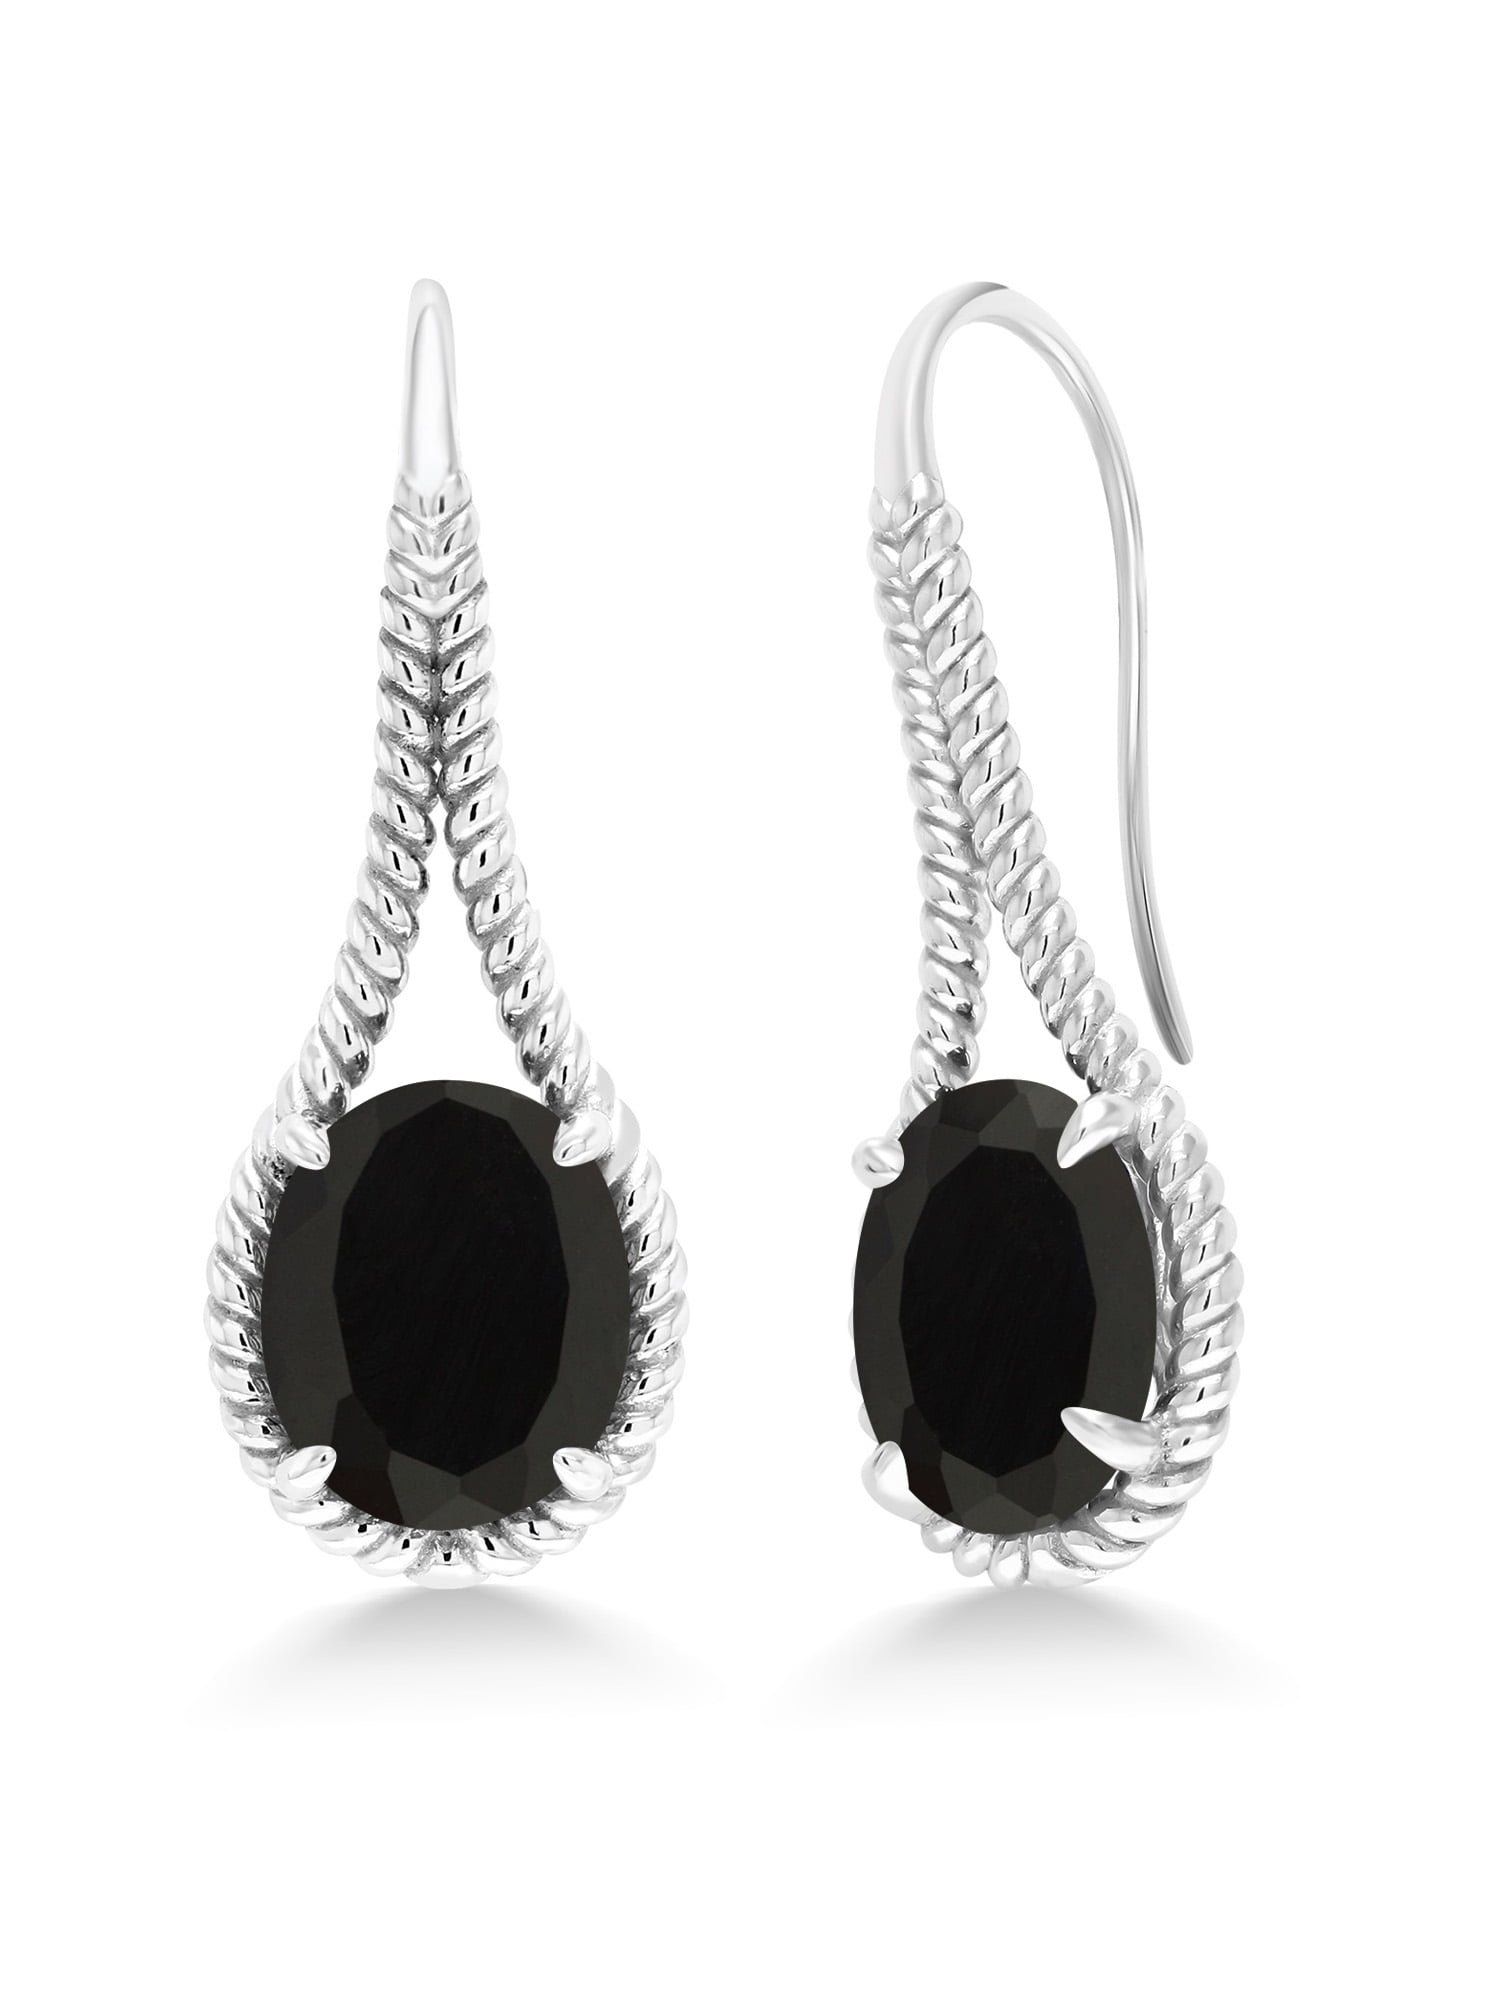 925 Sterling Silver Black Onyx Gemstone Oval Stud Earrings Design 5 